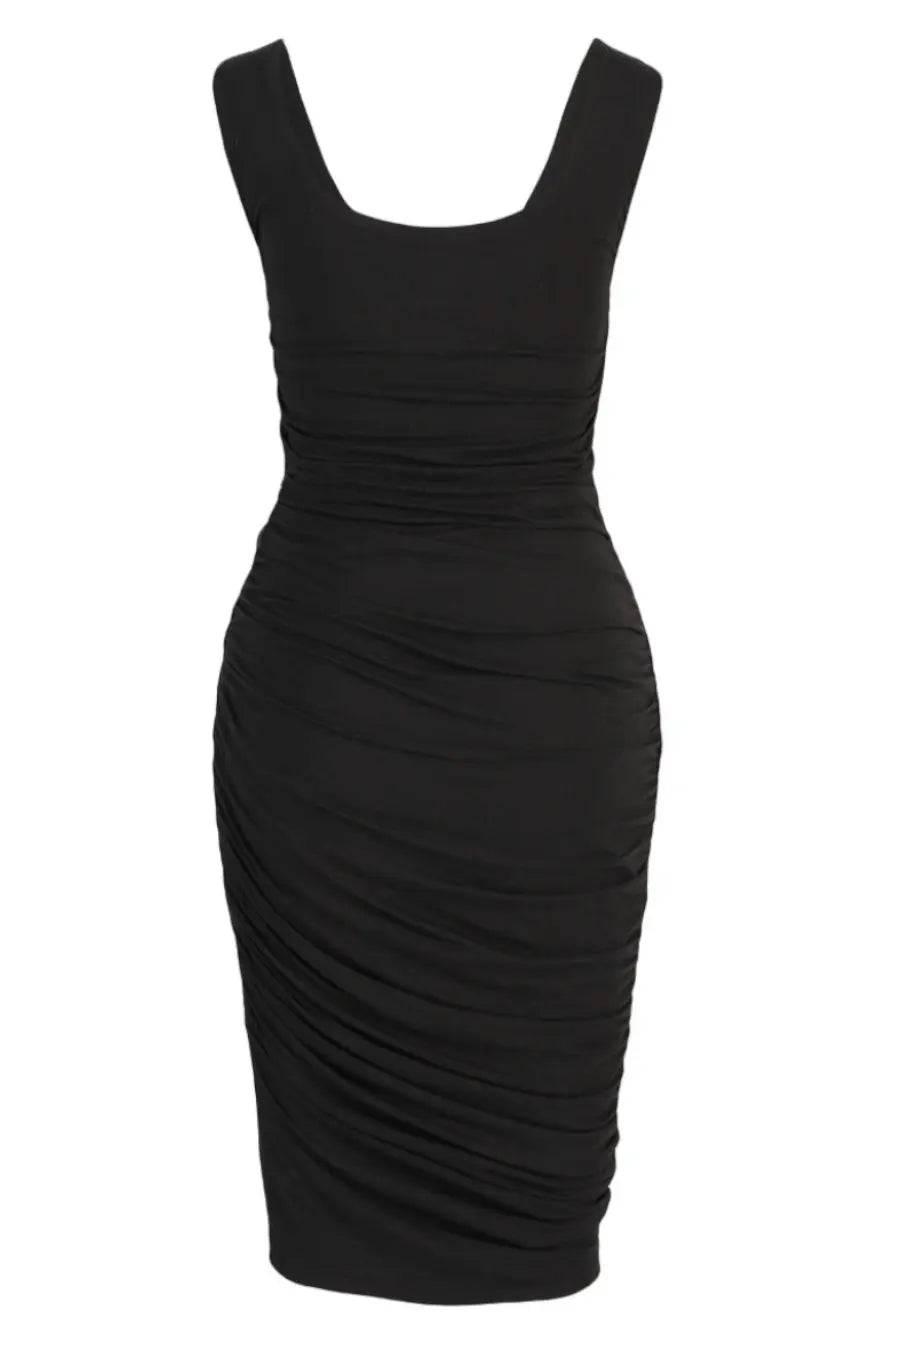 Embodycon™ Tank Shaping Dress - Black